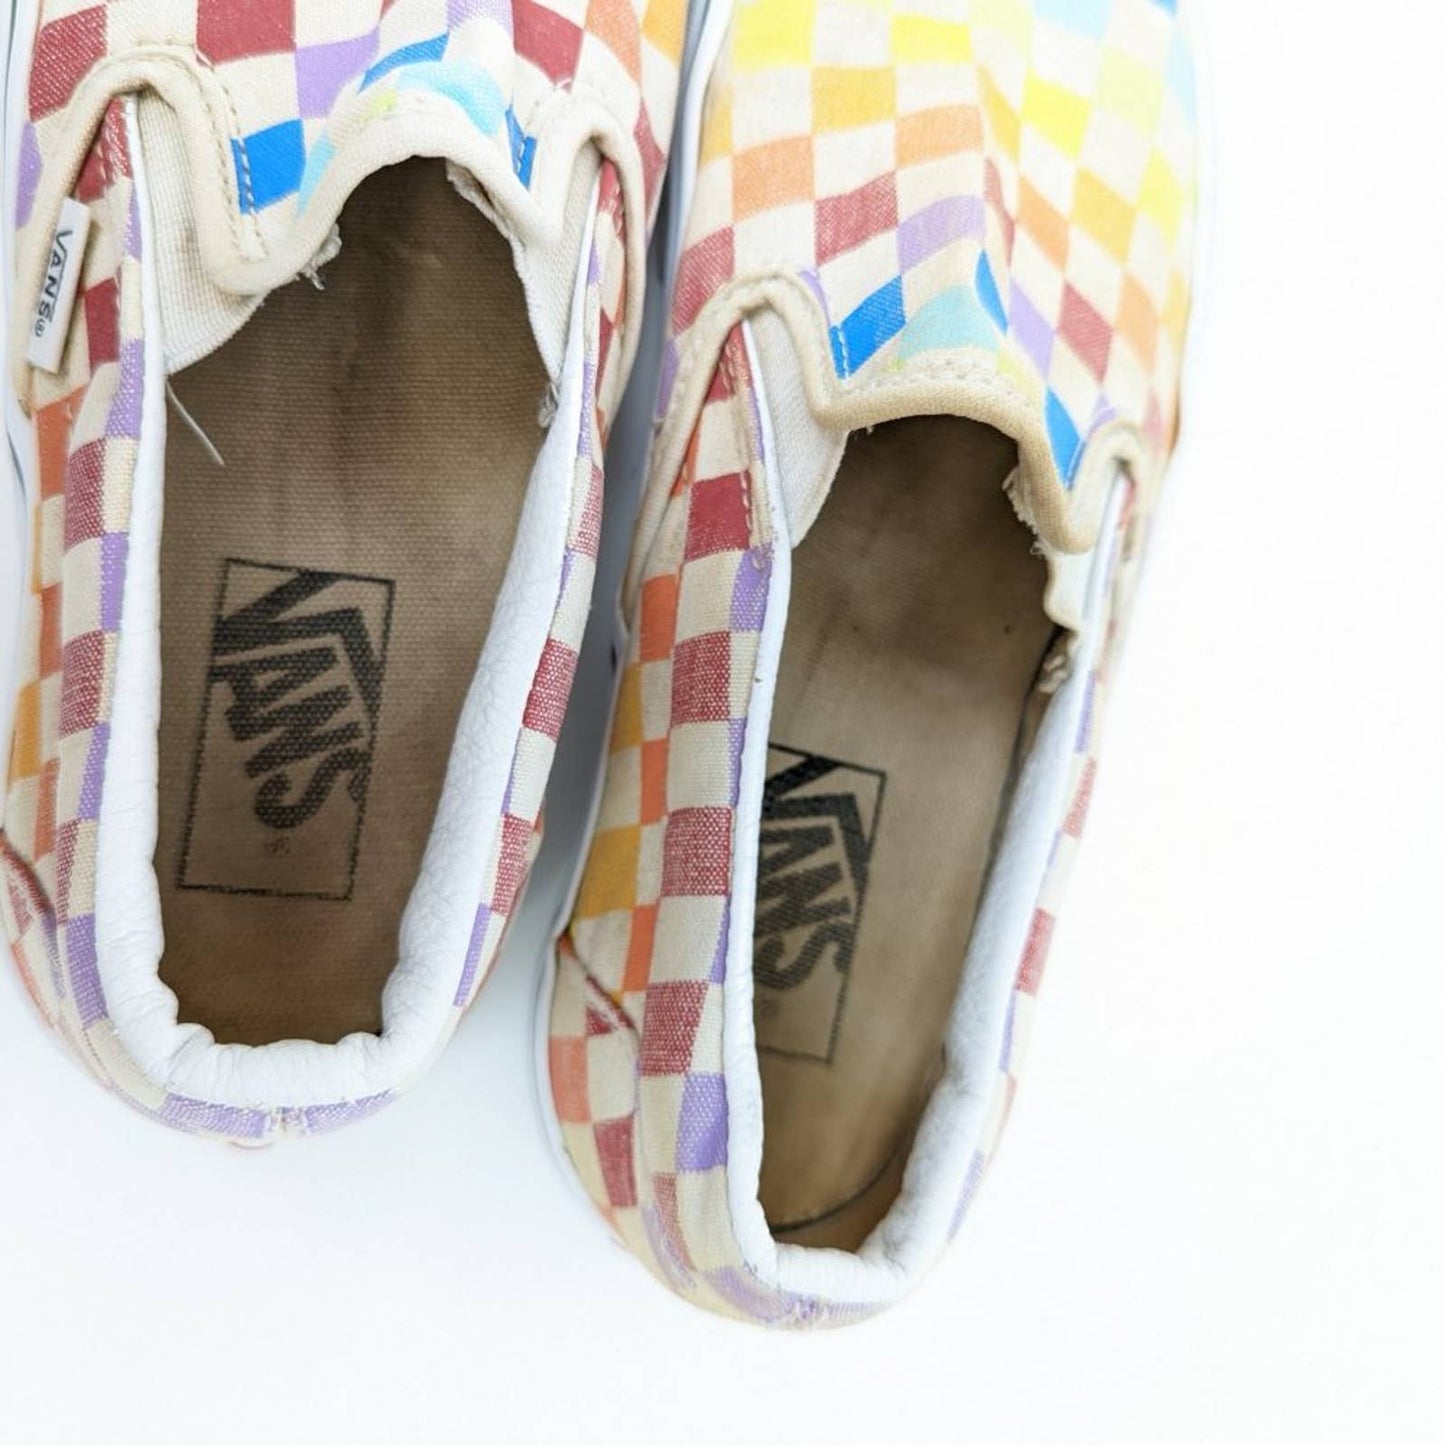 Vans Rainbow Checkered Loafer Slides - 7.5